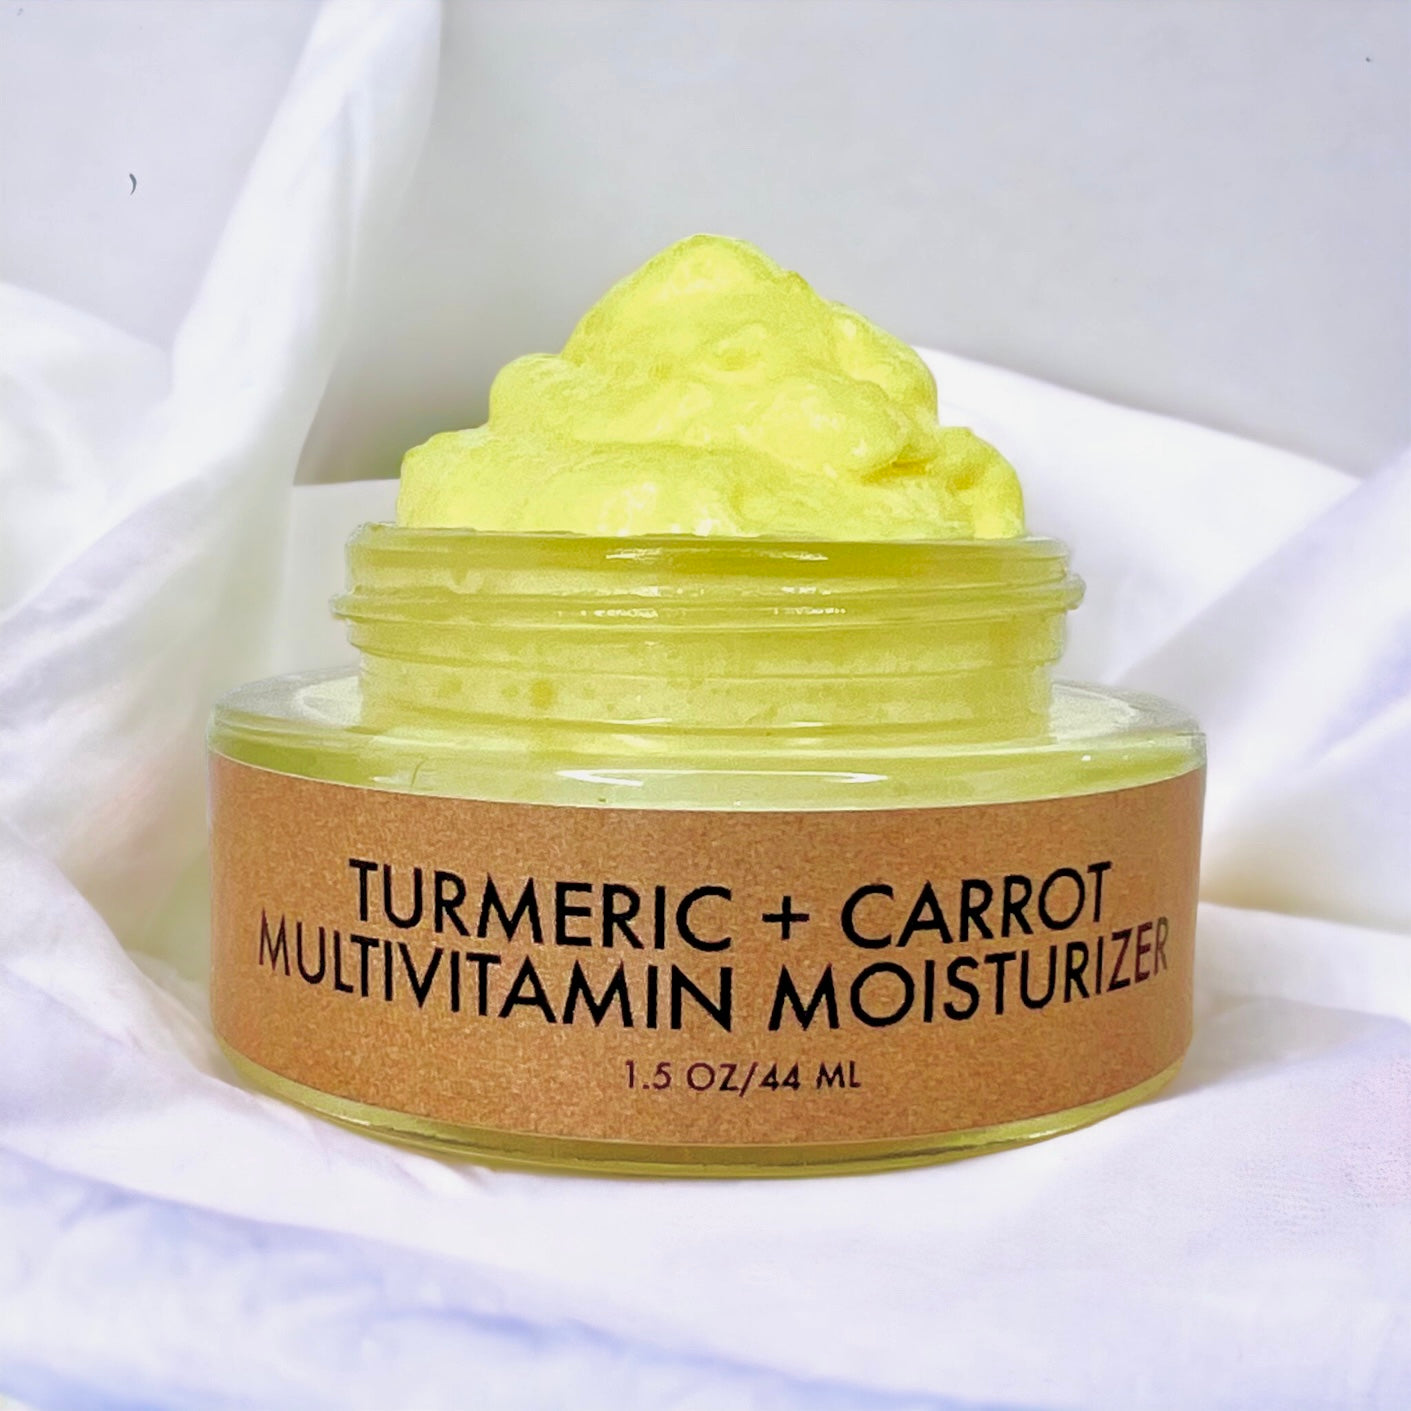 Turmeric + Carrot Multi-Vitamin Moisturizer